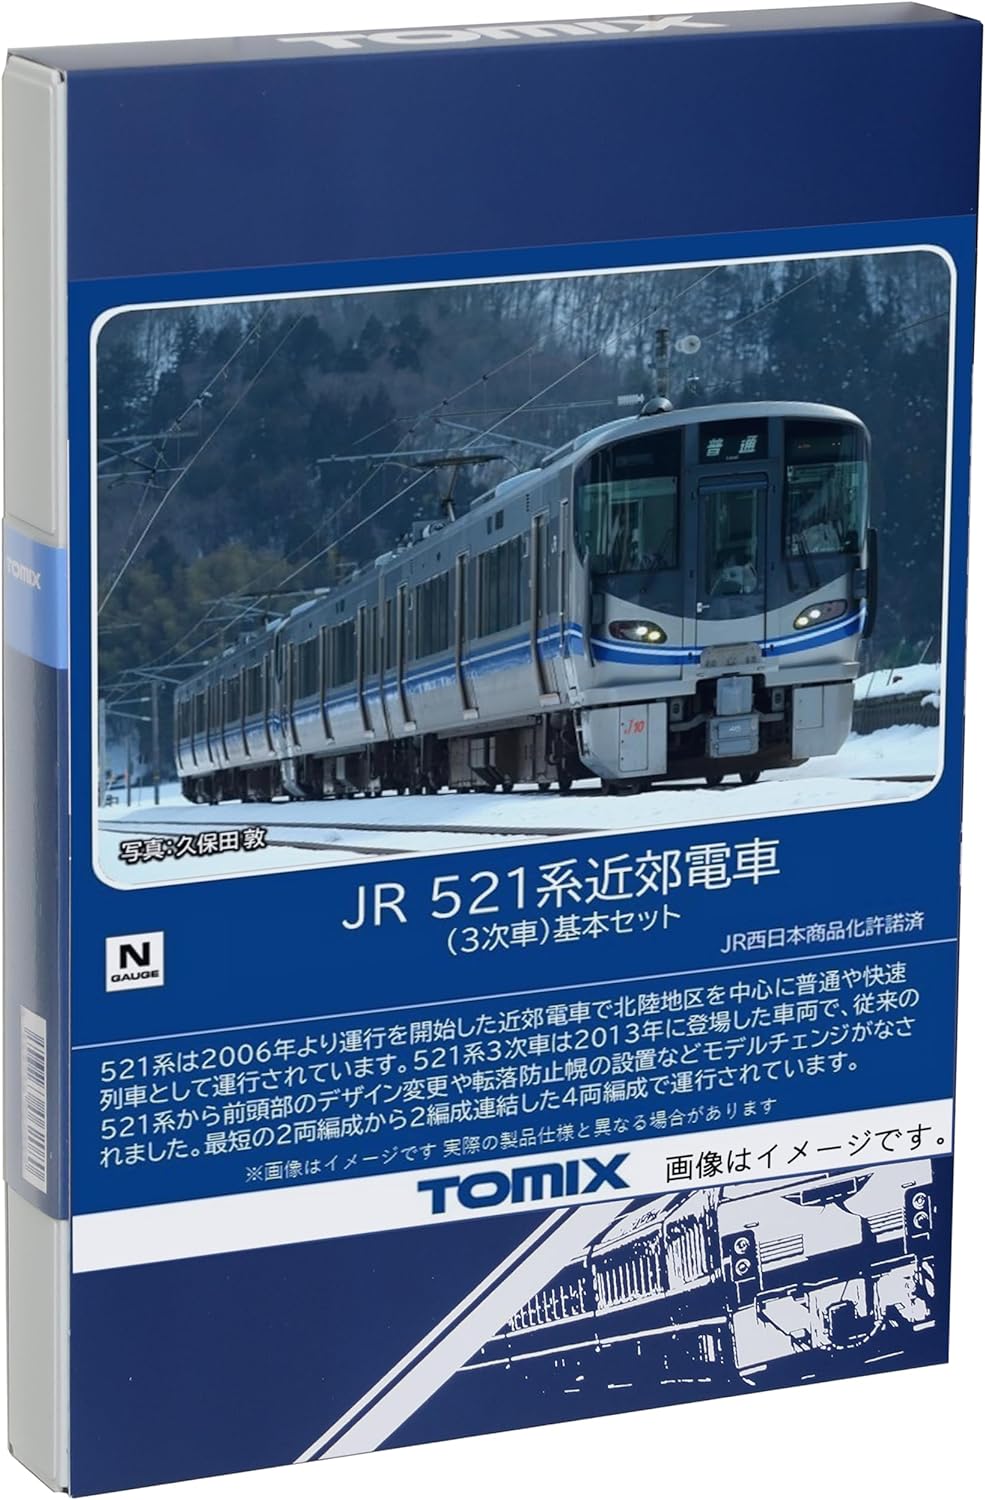 TOMIX 98132 N Gauge JR 521 Series 3rd Car Extension Set Railway Model Train - BanzaiHobby